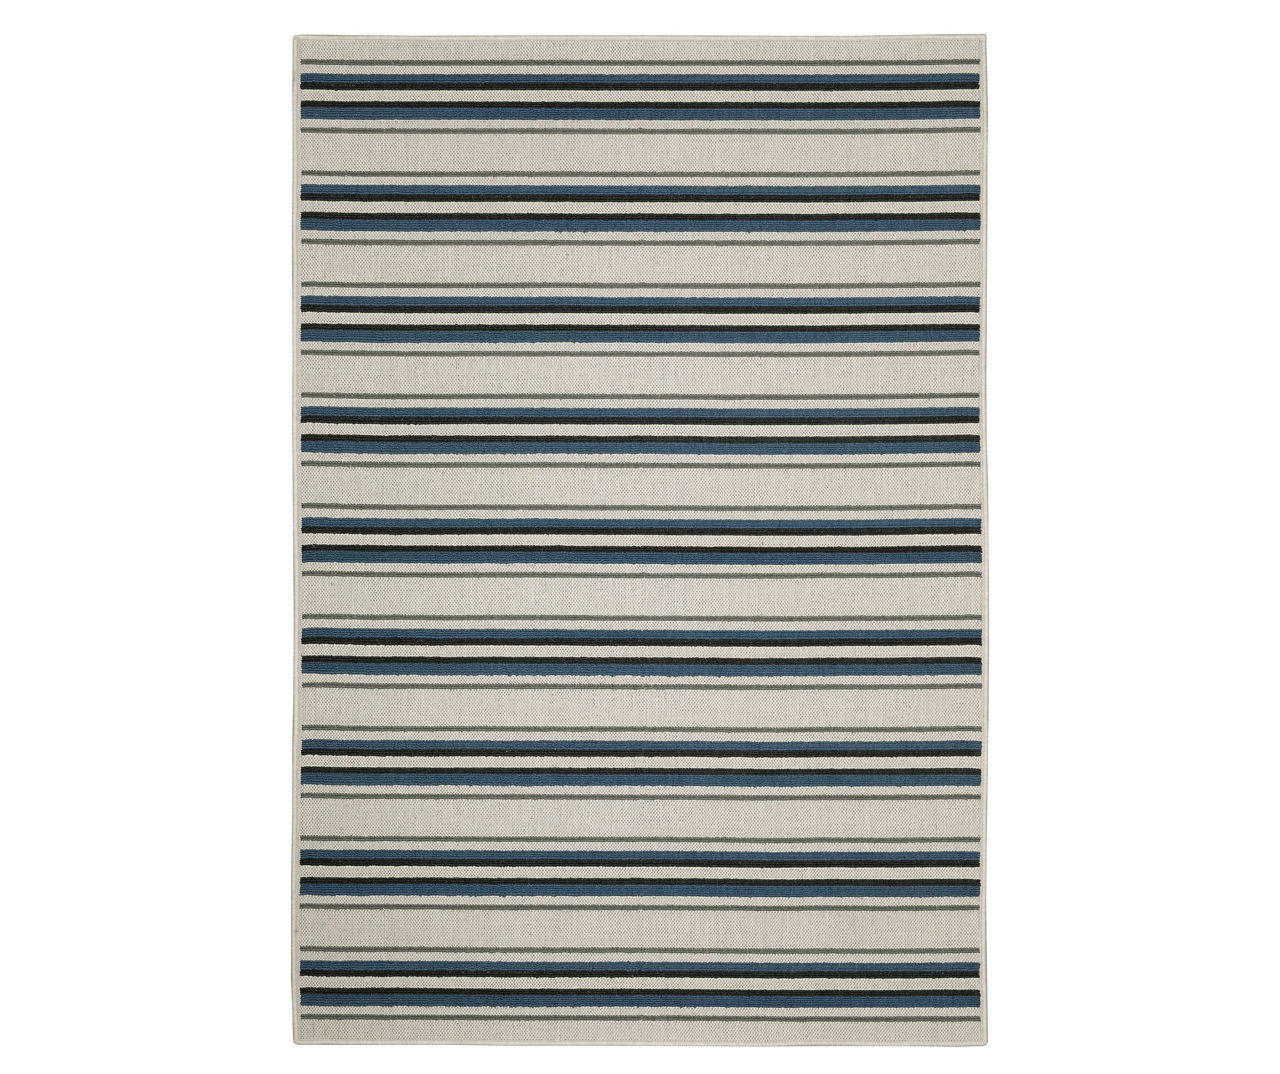 Torie Beige & Blue Stripe Outdoor Area Rug, (9.1' x 12.1')